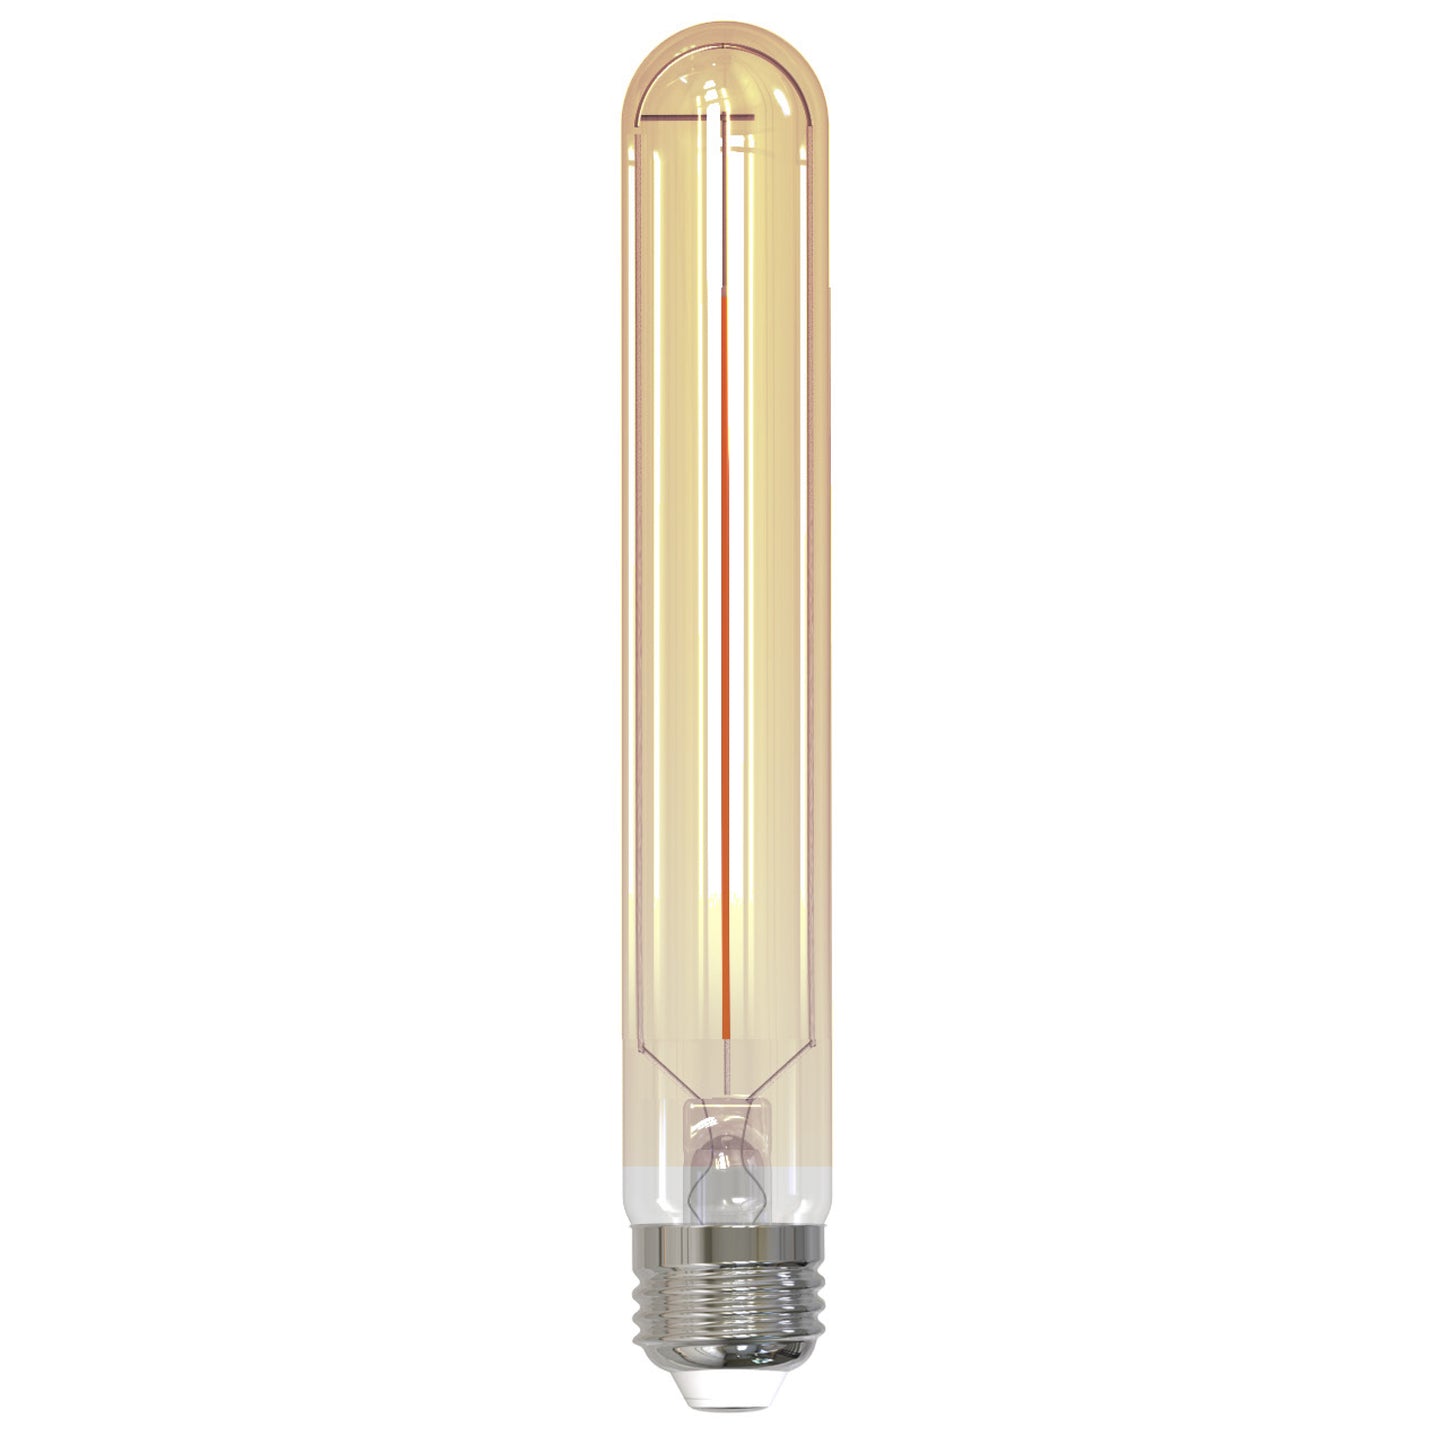 Bulbrite LED Filament 5 Watt Dimmable 7.5 Inch T9 Light Bulb with Antique Glass Finish and Medium (E26) Base - 2100K (Amber Light), 250 Lumens